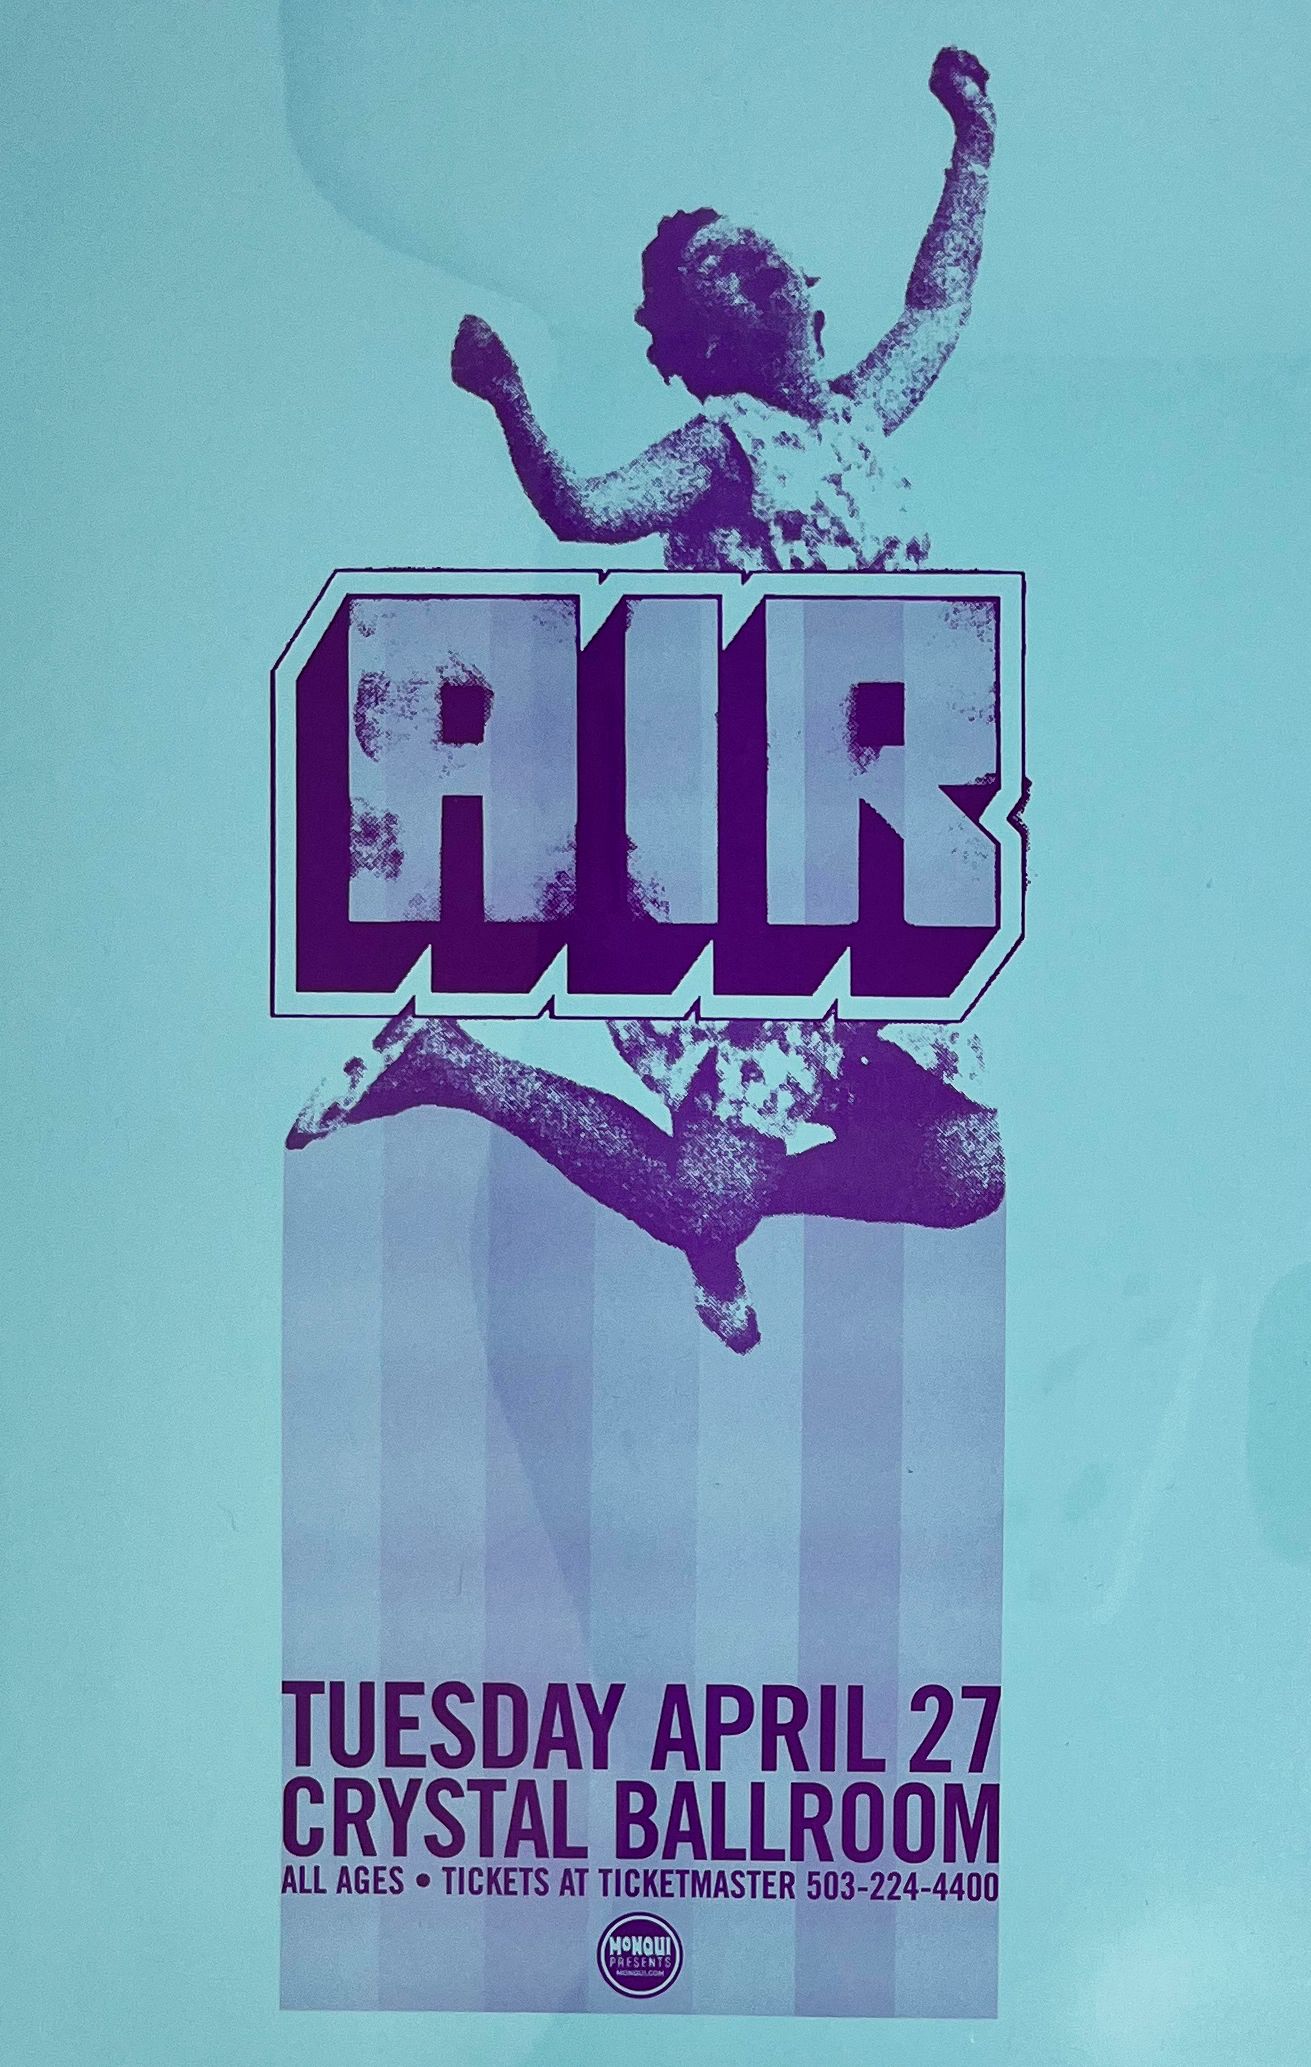 MXP-194.2 Air Crystal Ballroom 1999 Concert Poster